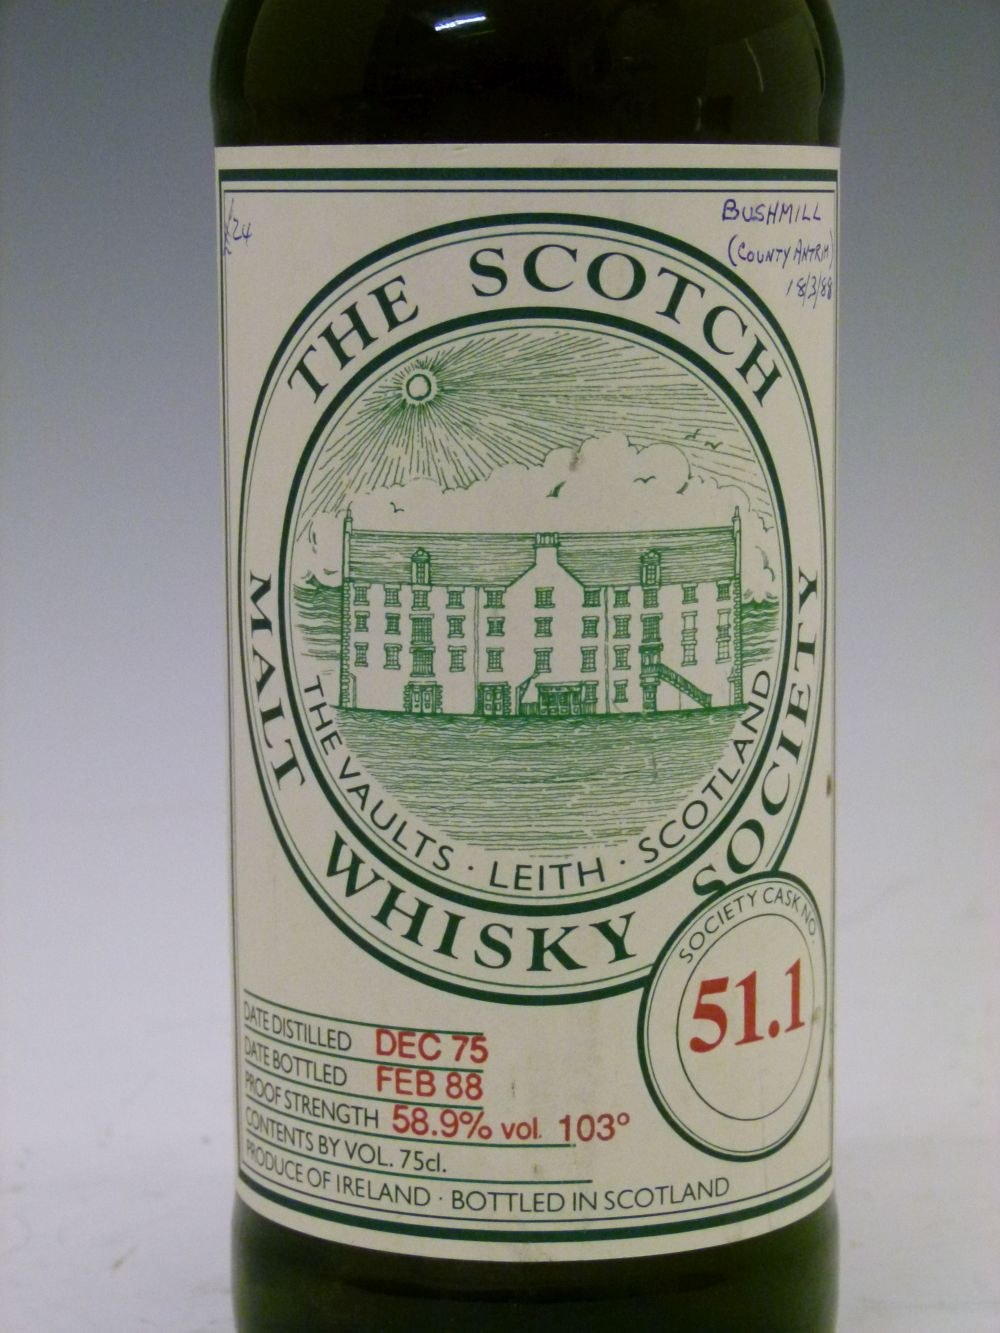 Scotch Malt Whisky Society (SMWS) Cask No. 51.1 (Bushmills) distilled December 75, bottled - Image 2 of 4